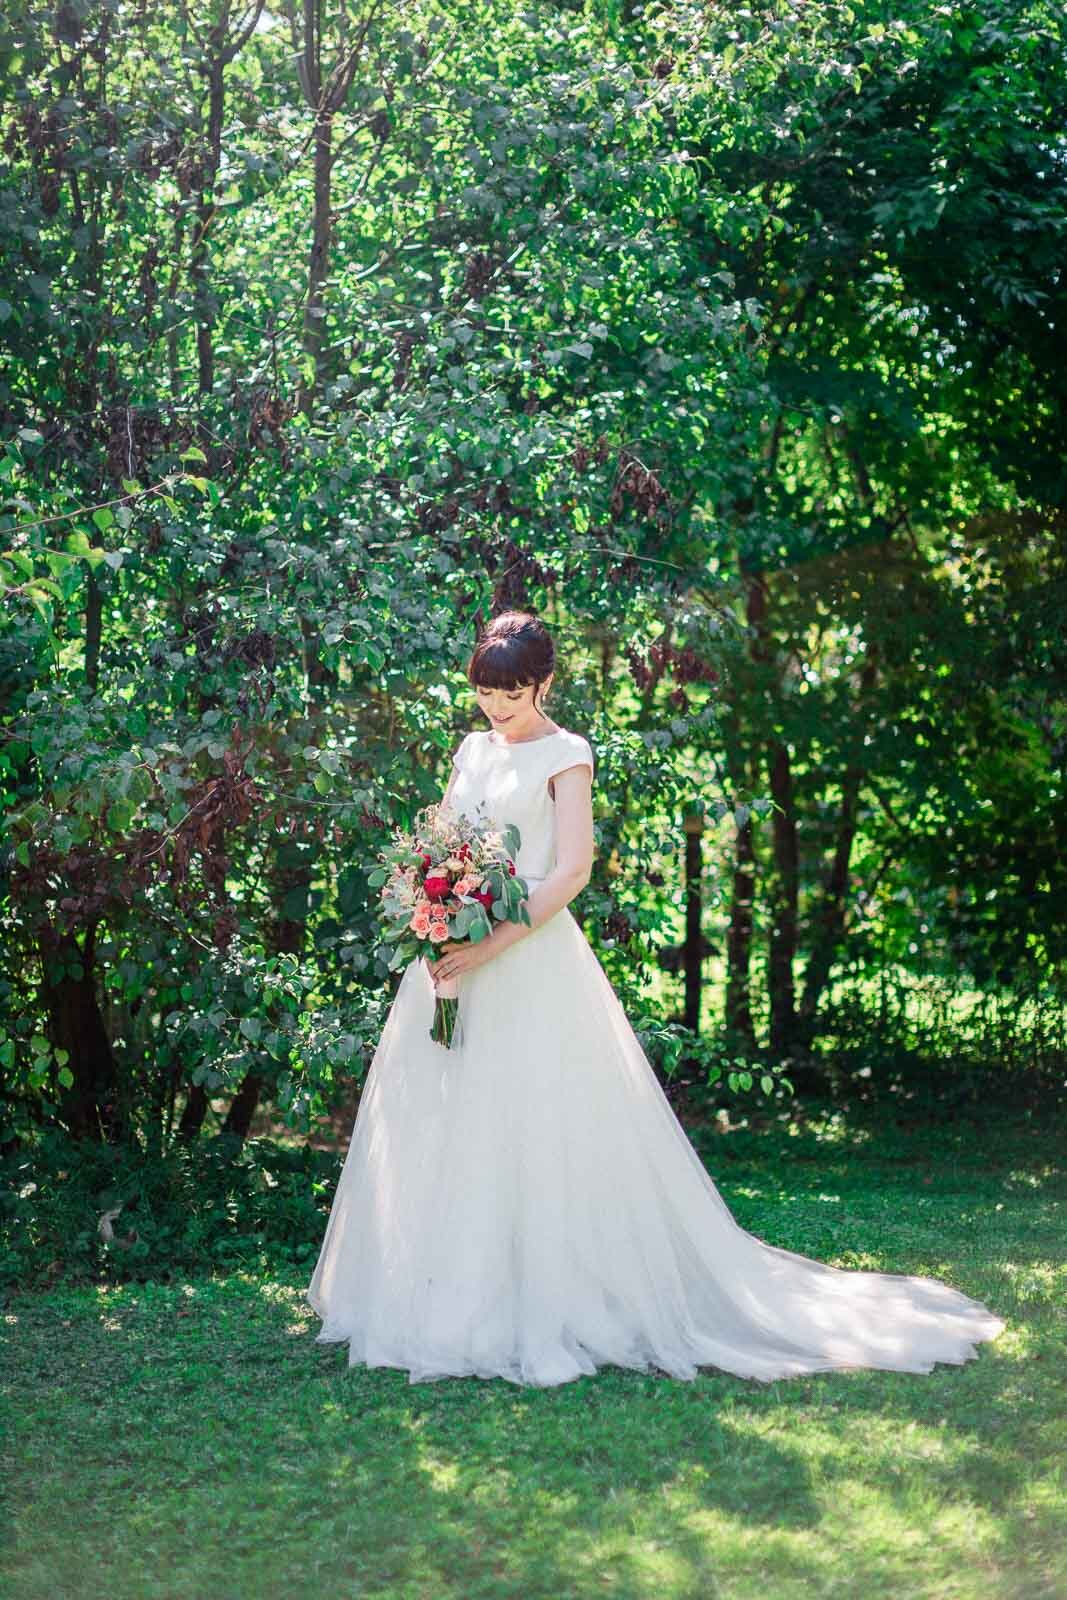 charlottesville-virginia-luray-wedding-photographer-romatic-film-fuji400h-35mm-film-2-22.jpg